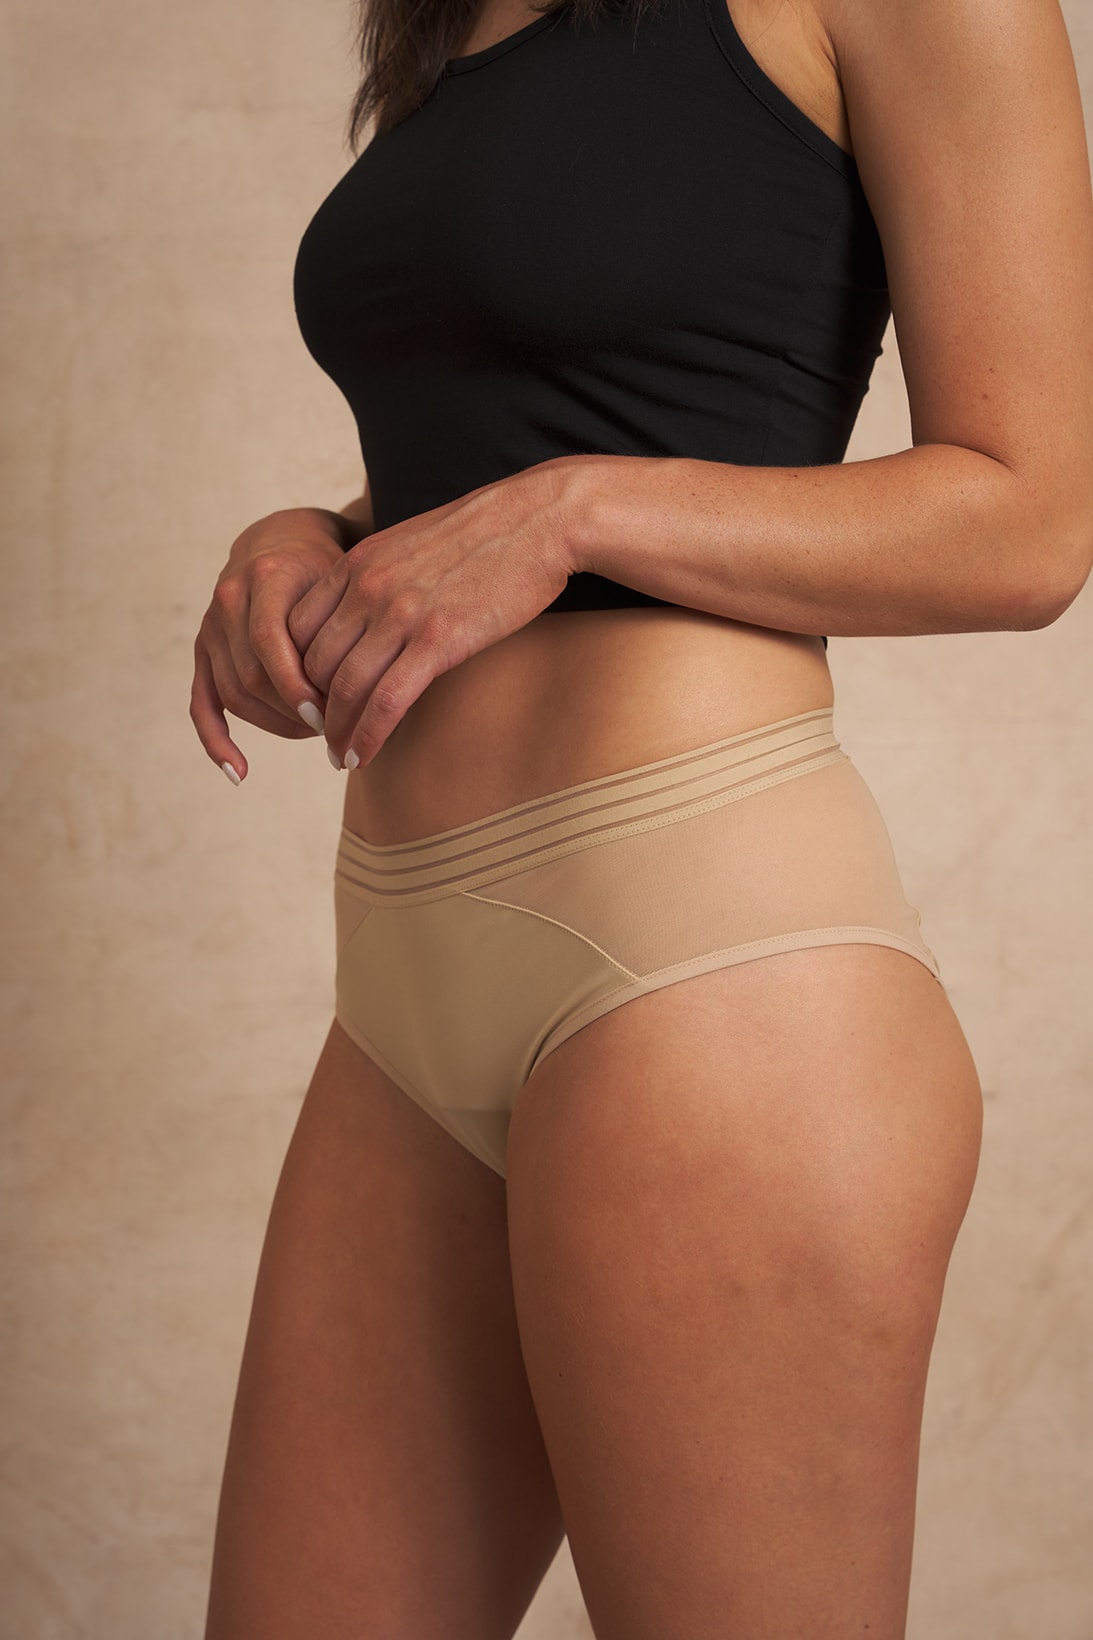 Saalt Leakproof Period Underwear Range Release